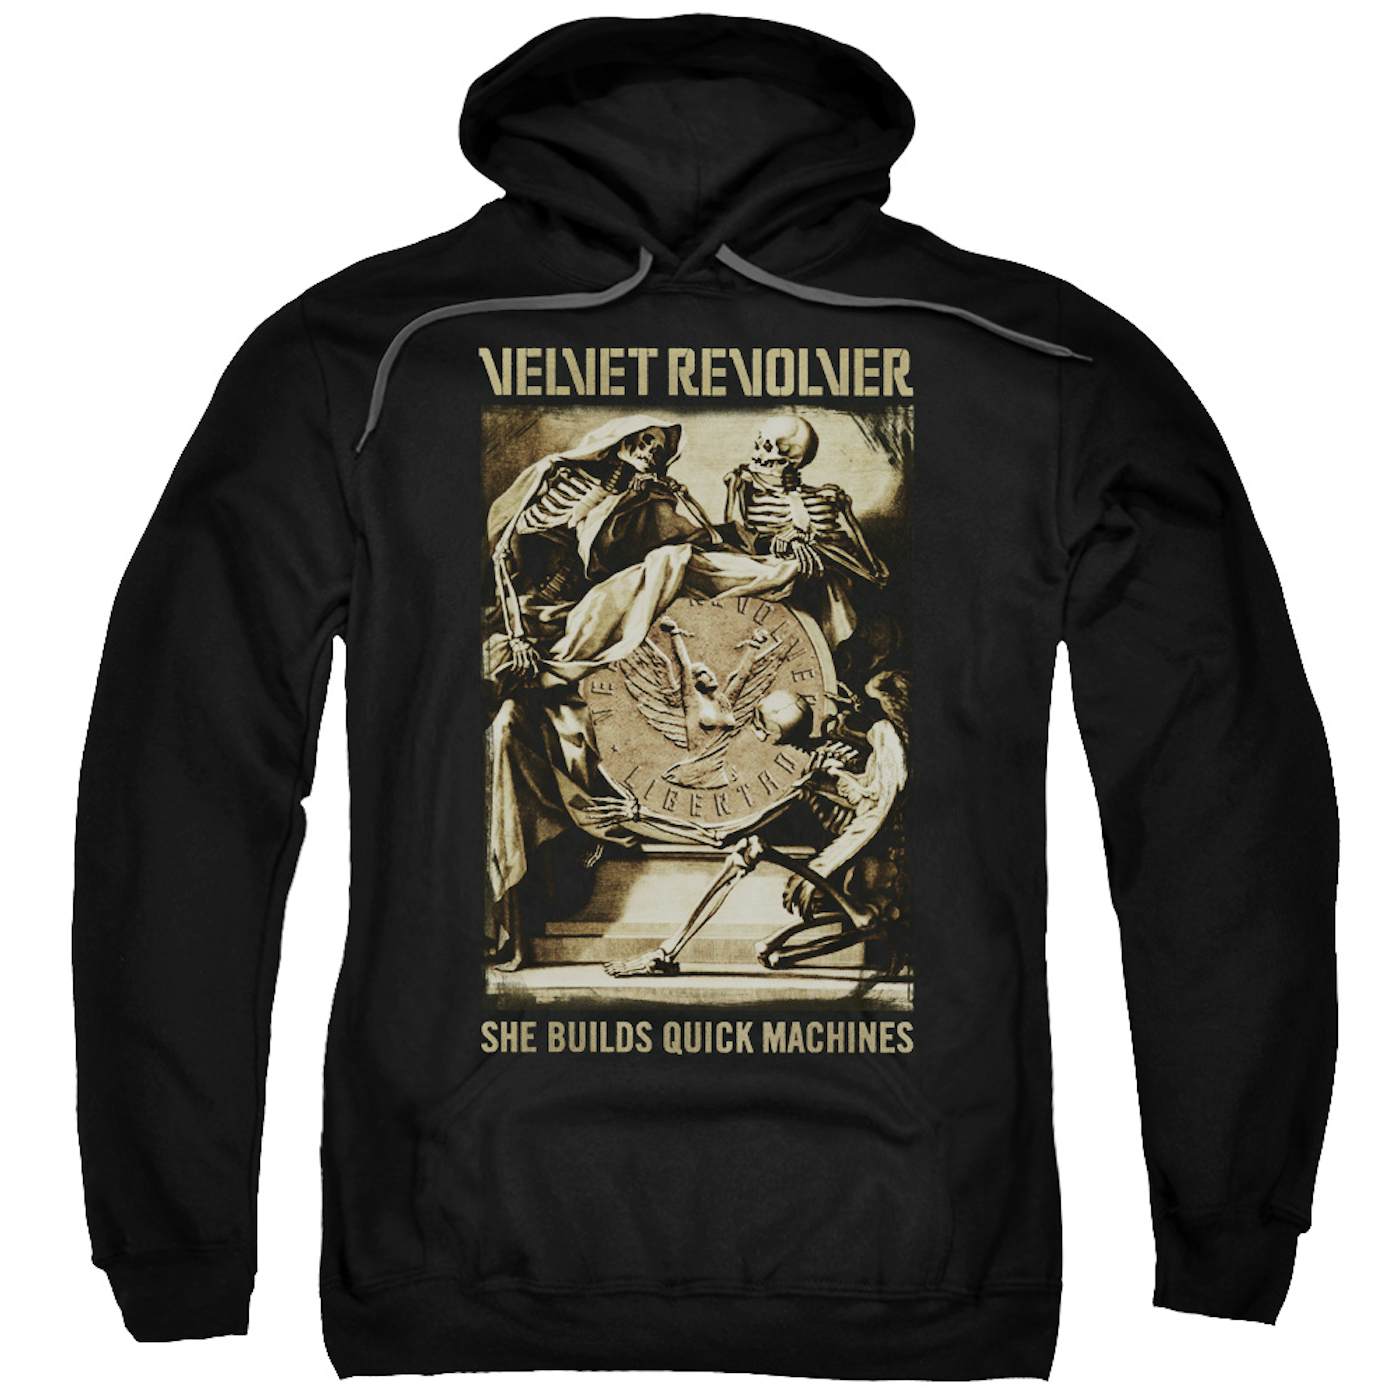 Velvet Revolver Hoodie | QUICK MACHINES Pull-Over Sweatshirt